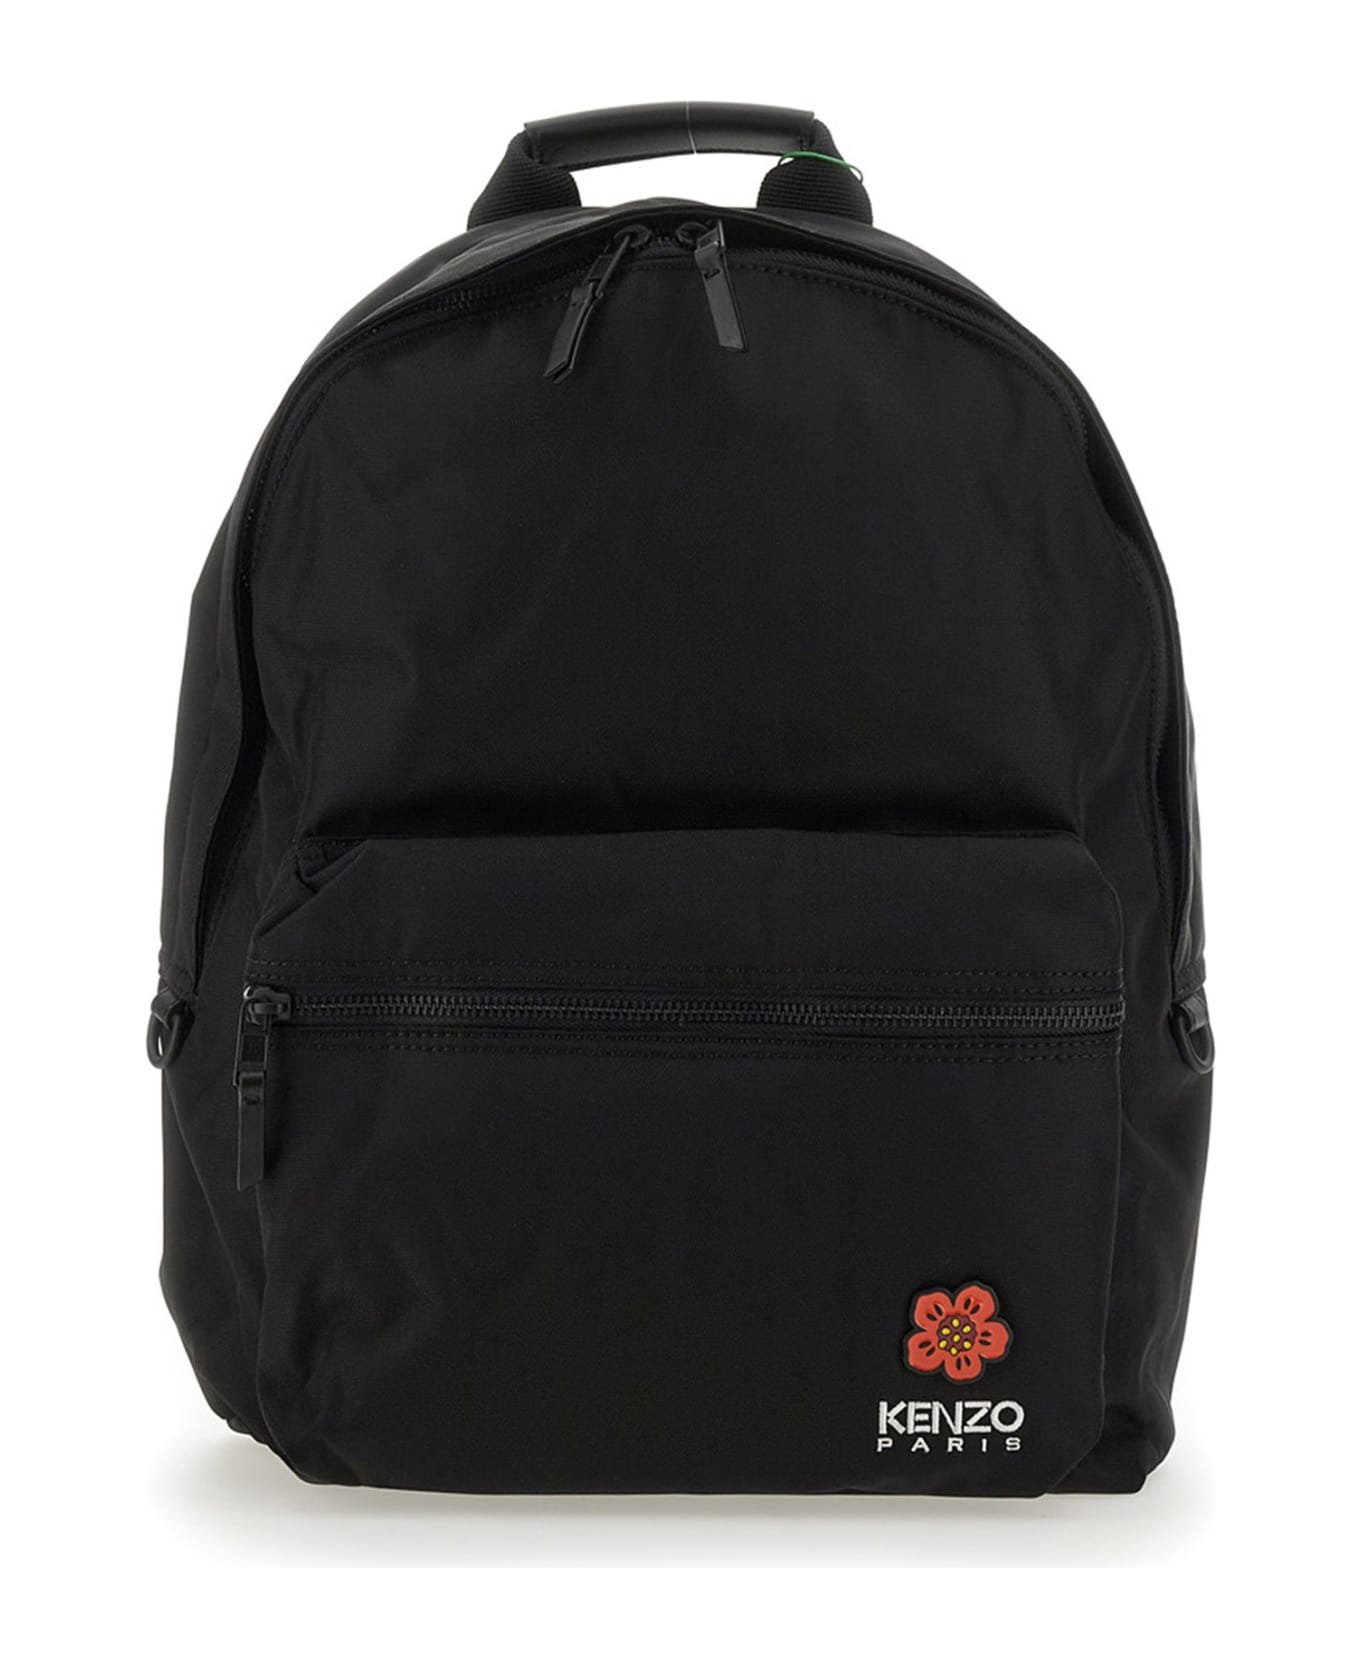 Kenzo Backpack With Logo - 99 NOIR